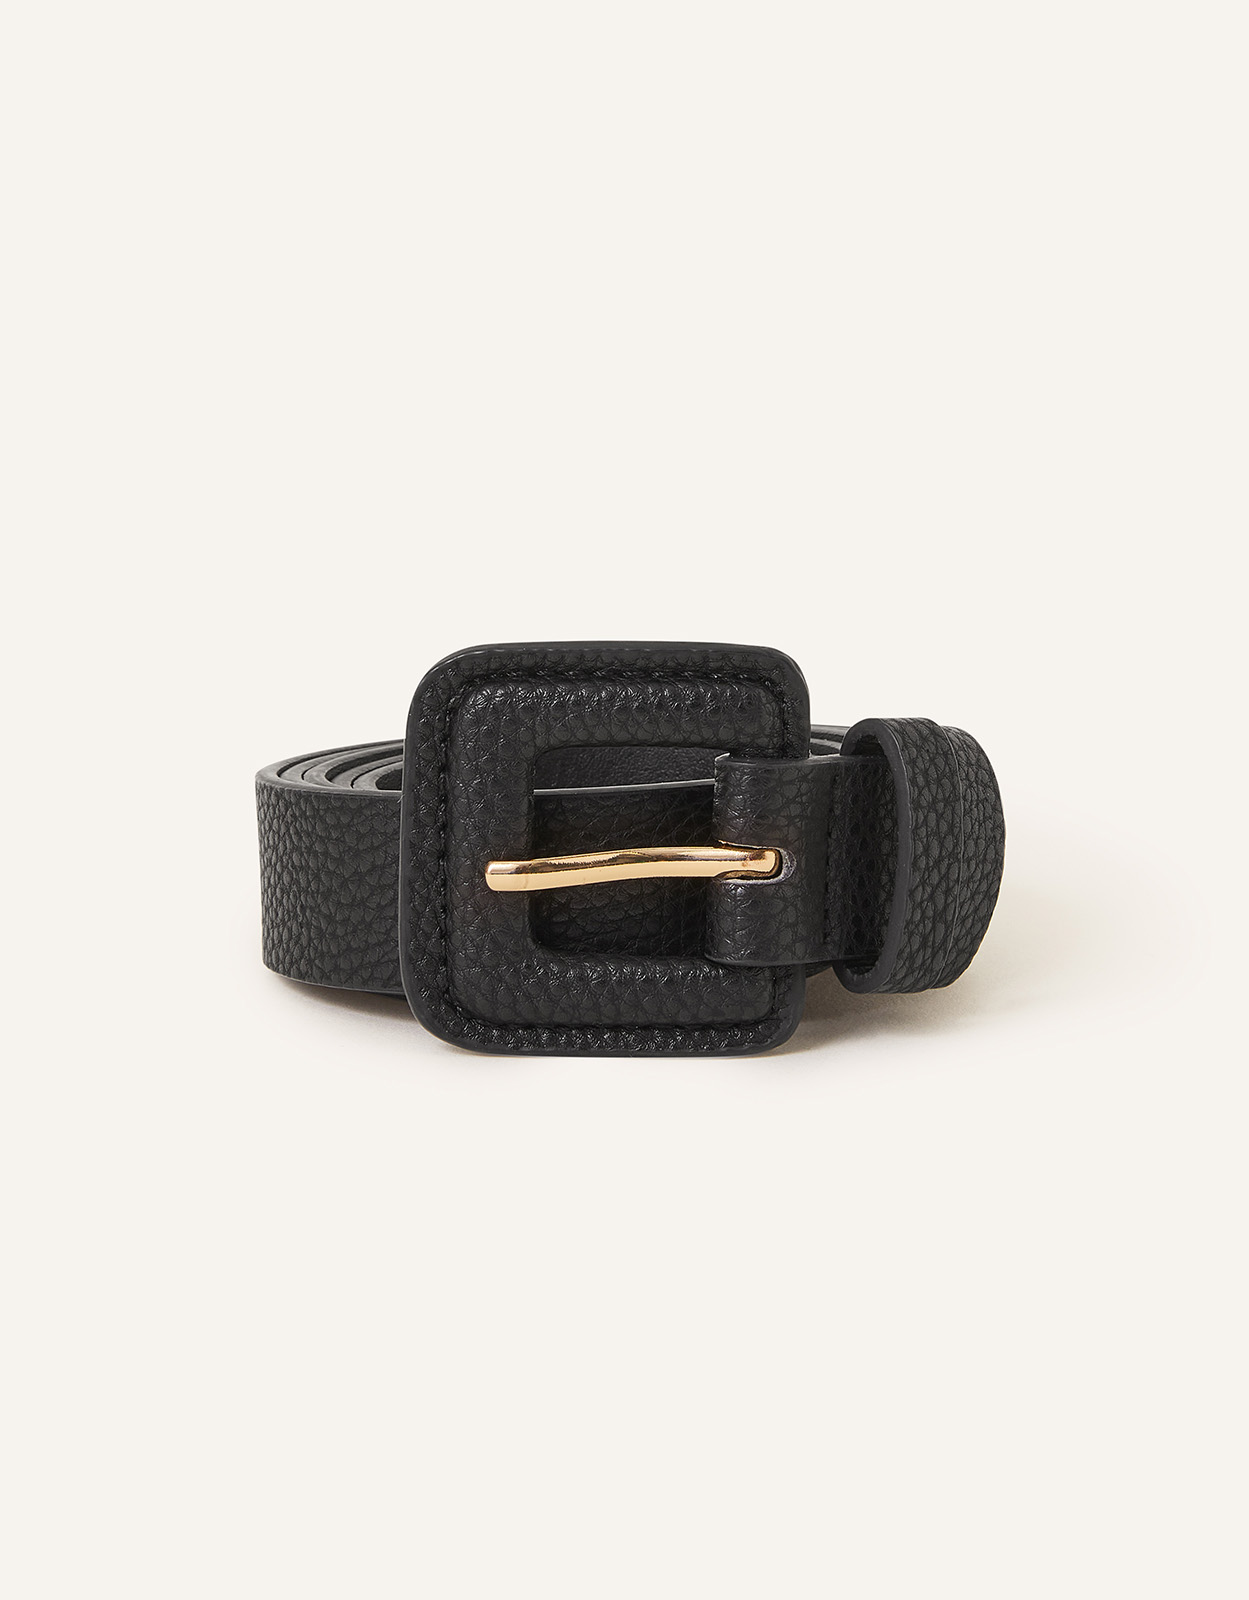 Accessorize Women's Square Buckle Belt Black, Size: S